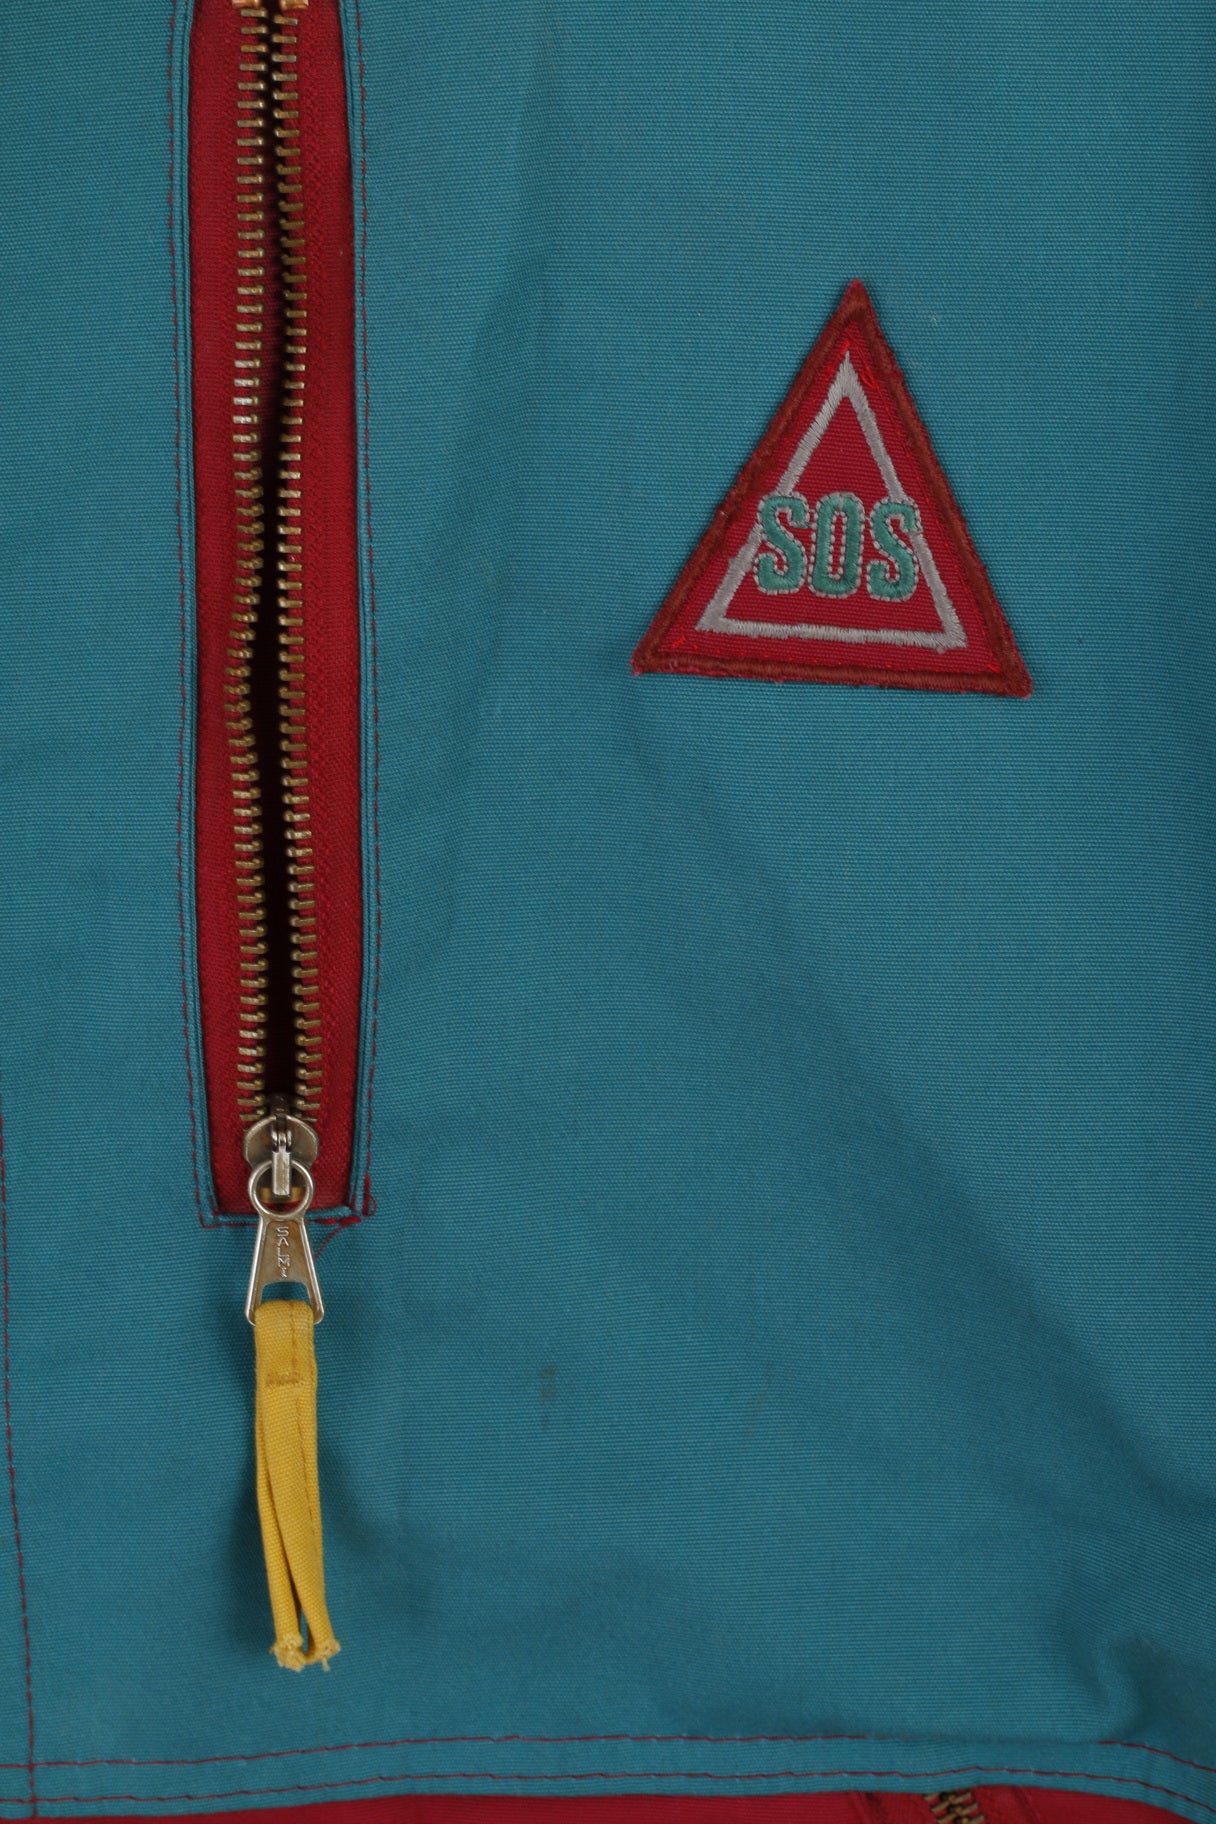 SOS Redline Men S Jacket Bomber Vintage Cotton Blend Burgundy Zip Up Retro Top